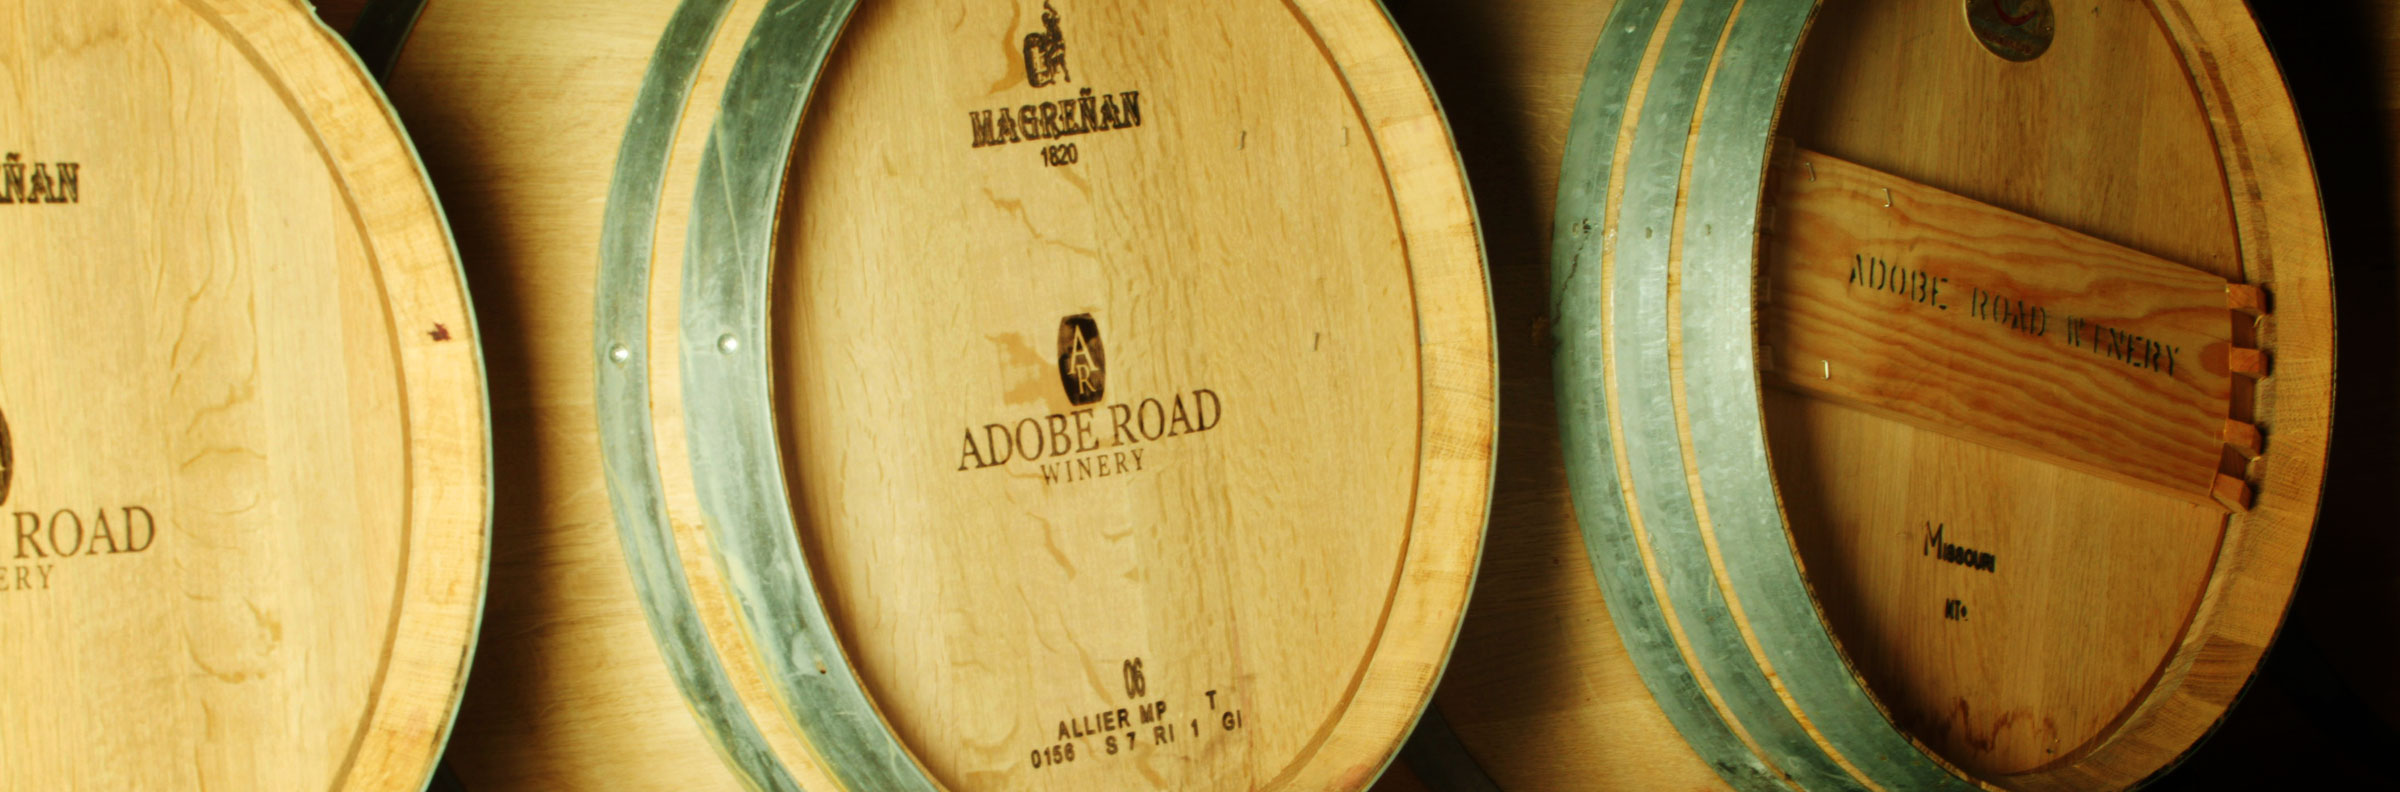 Three wine barrels with logo Adobe Road Winery